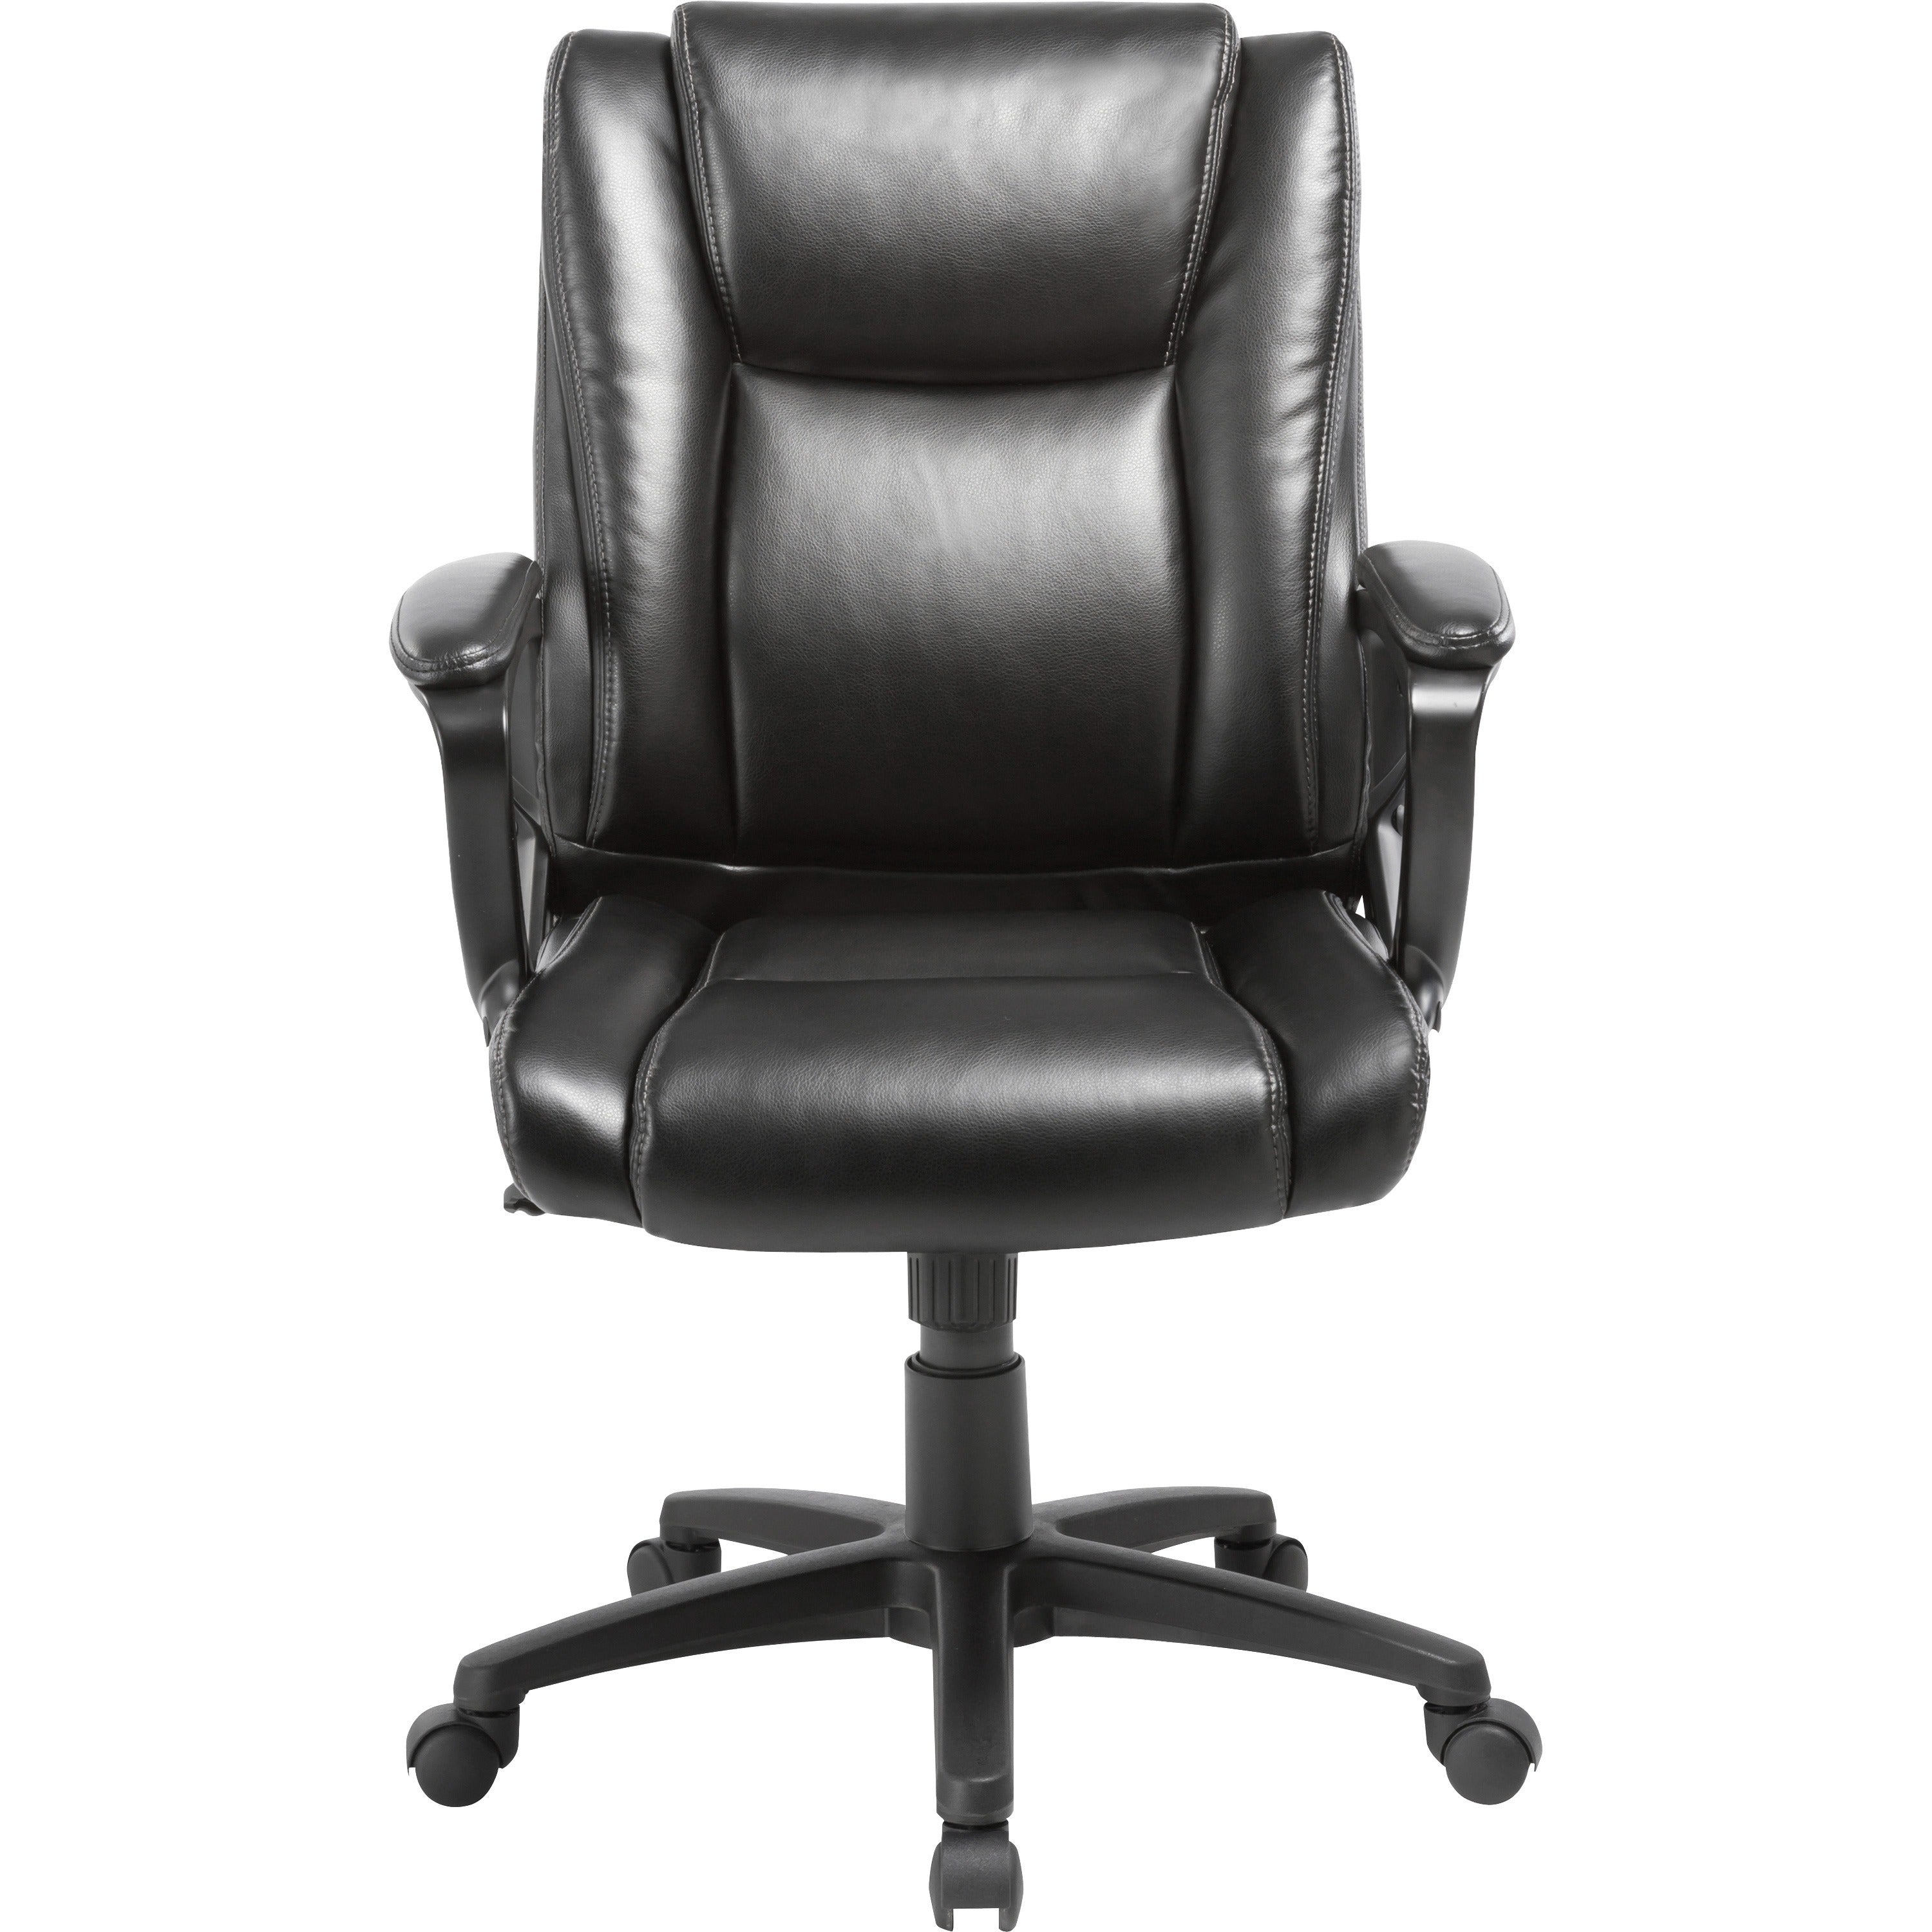 soho-igh-back-office-chair-black-bonded-leather-seat-black-bonded-leather-back-high-back-5-star-base-1-each_llr81801 - 2